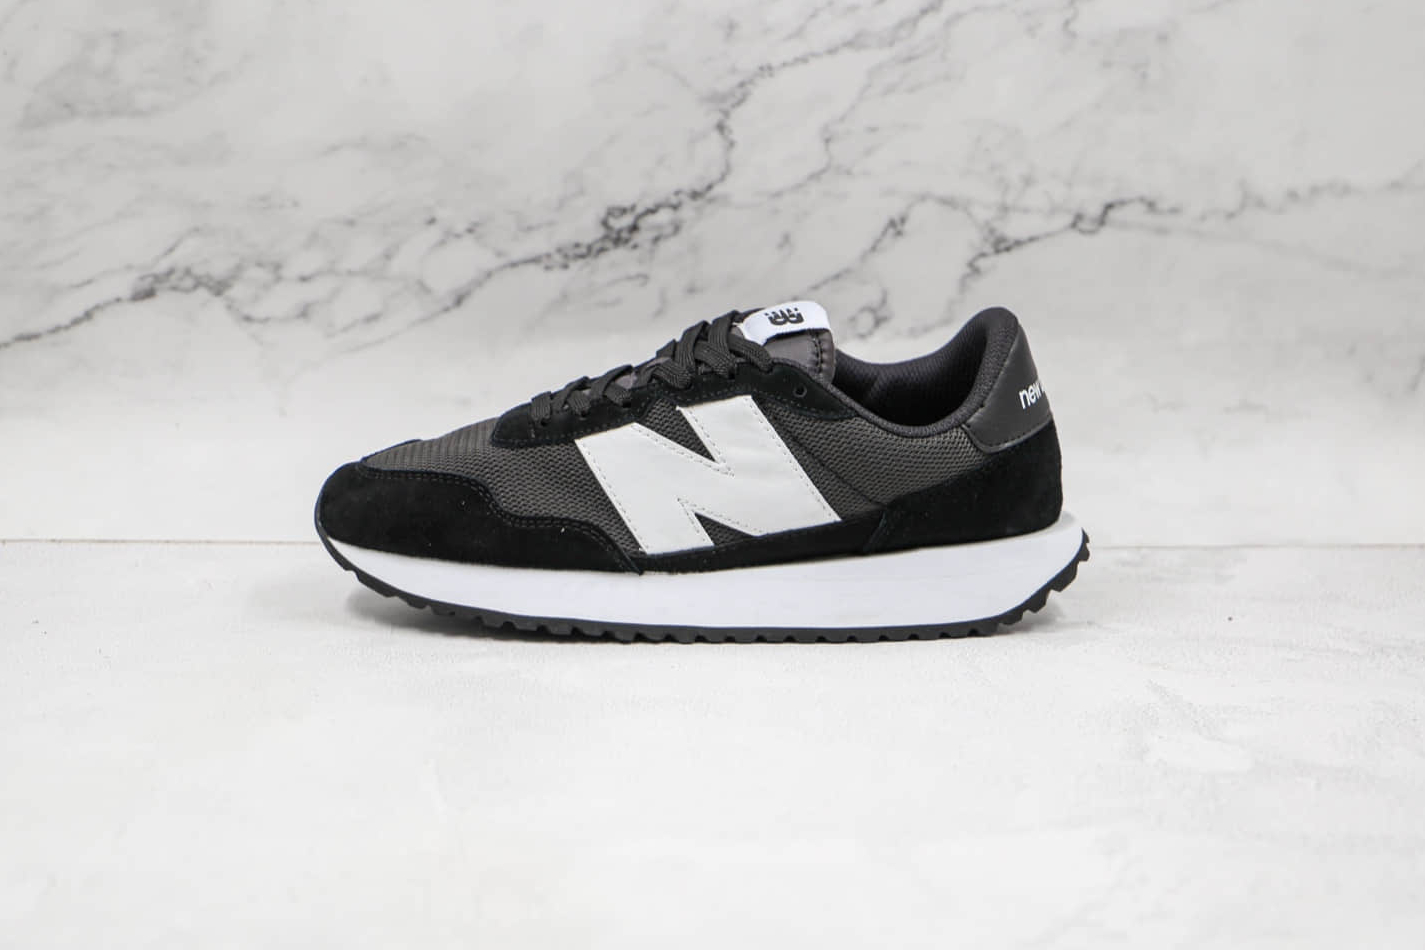 New Balance 237 Shoes Black Grey MS237CC - Sleek and Stylish Sneakers